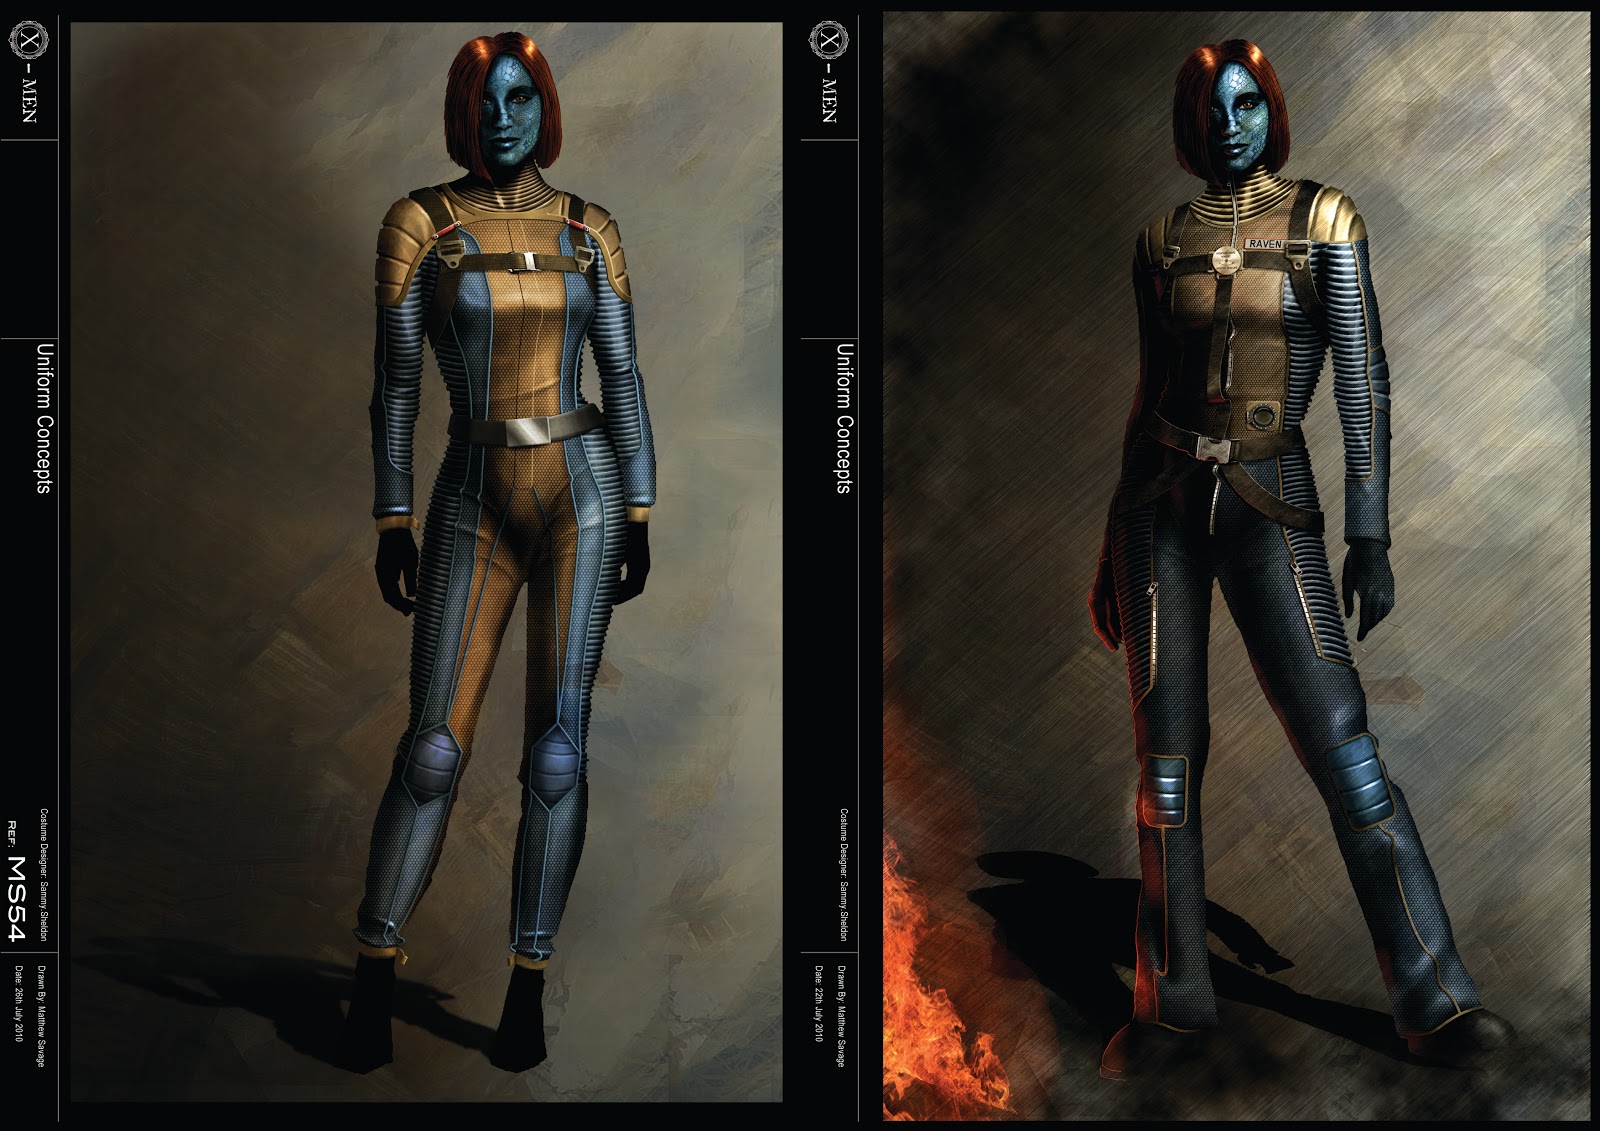 X Men First Class Concept Art Featuring Alternate Costumes For Havok Mystique